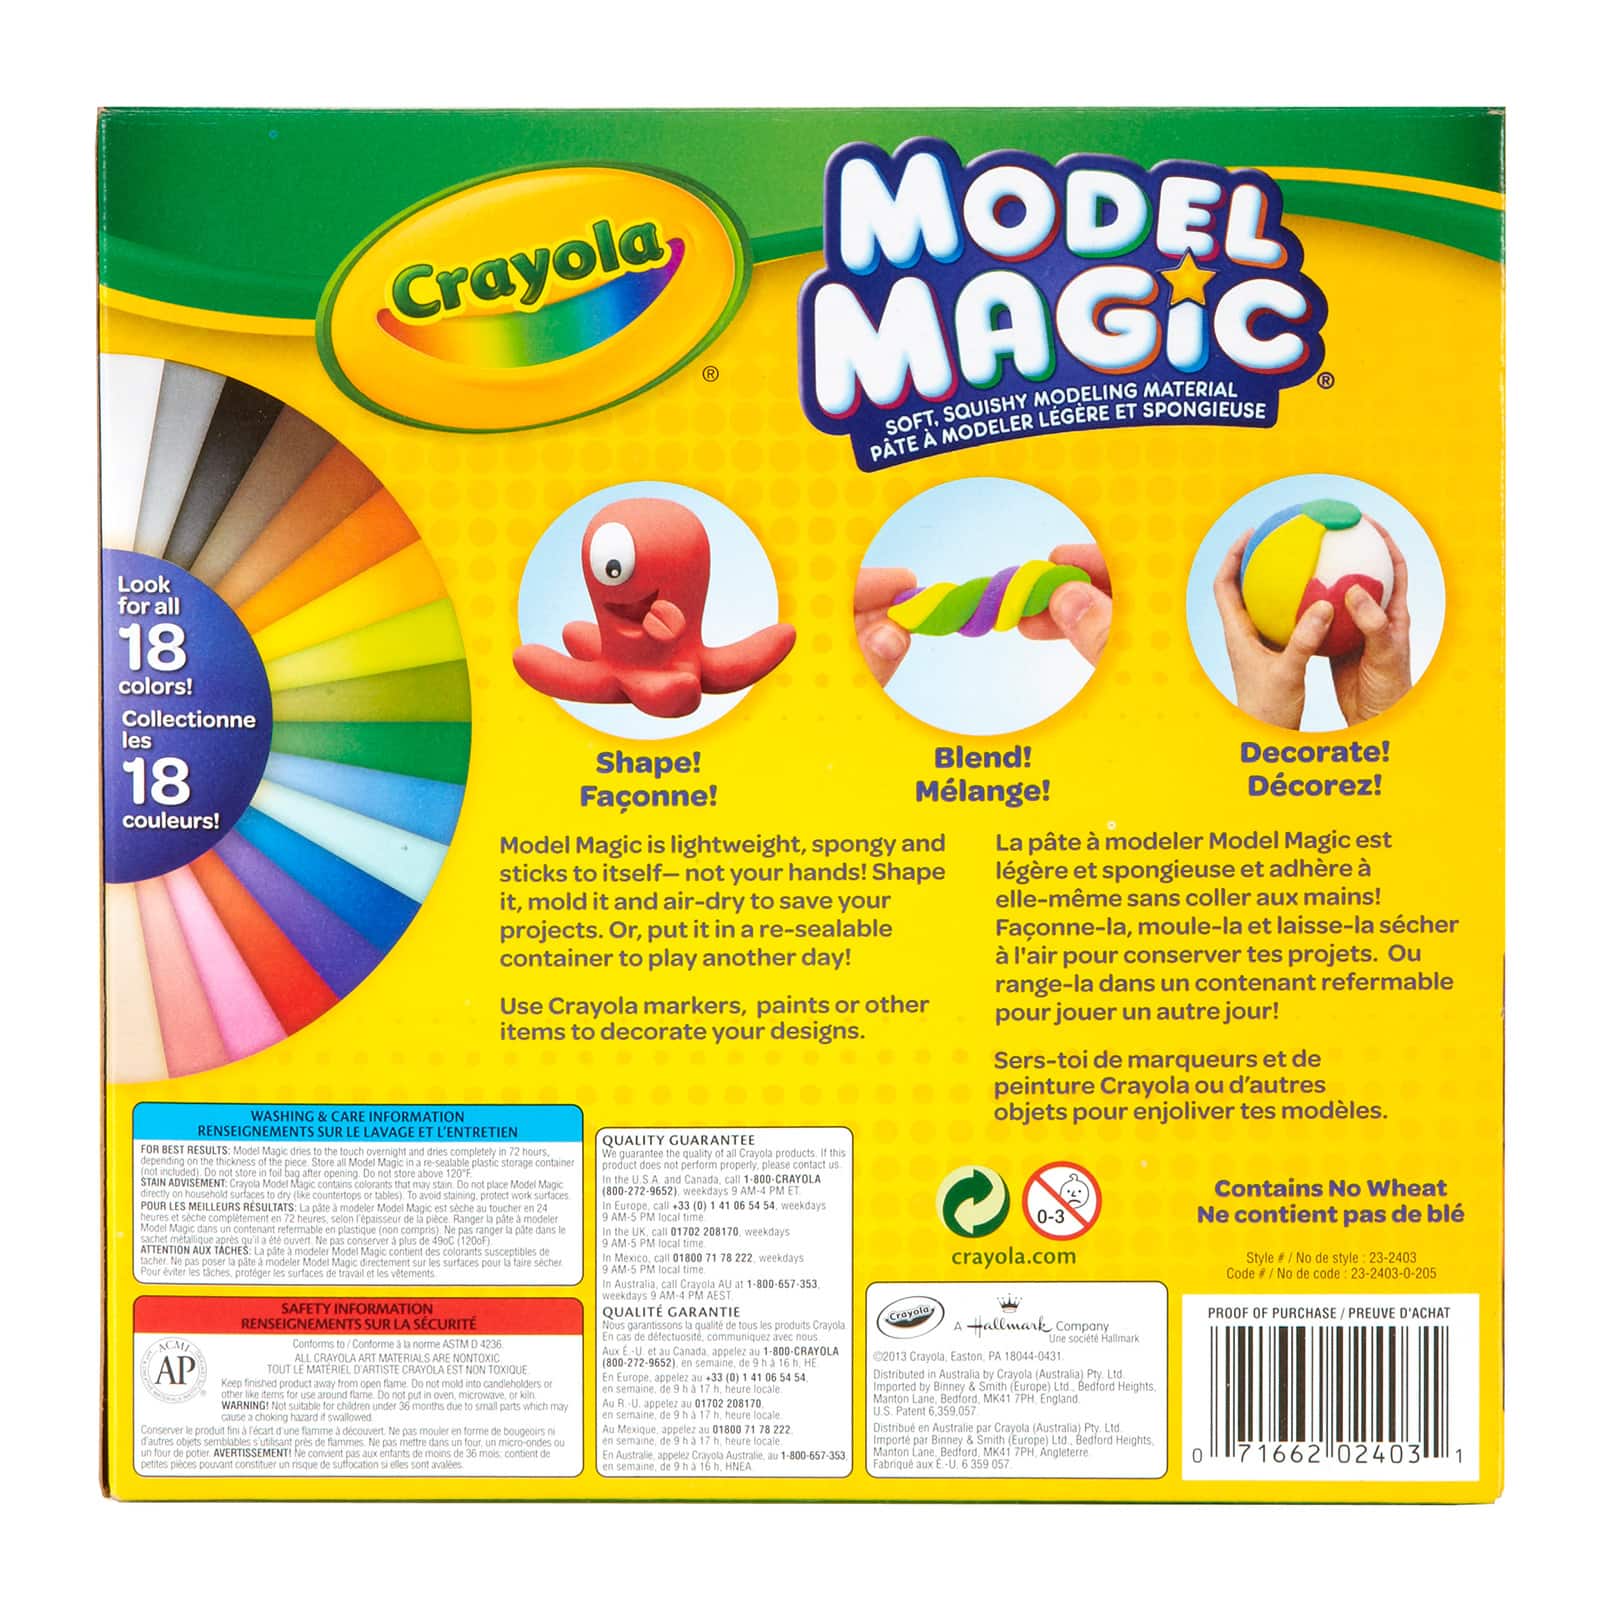 Crayola&#xAE; Model Magic&#xAE; Deluxe Variety Pack